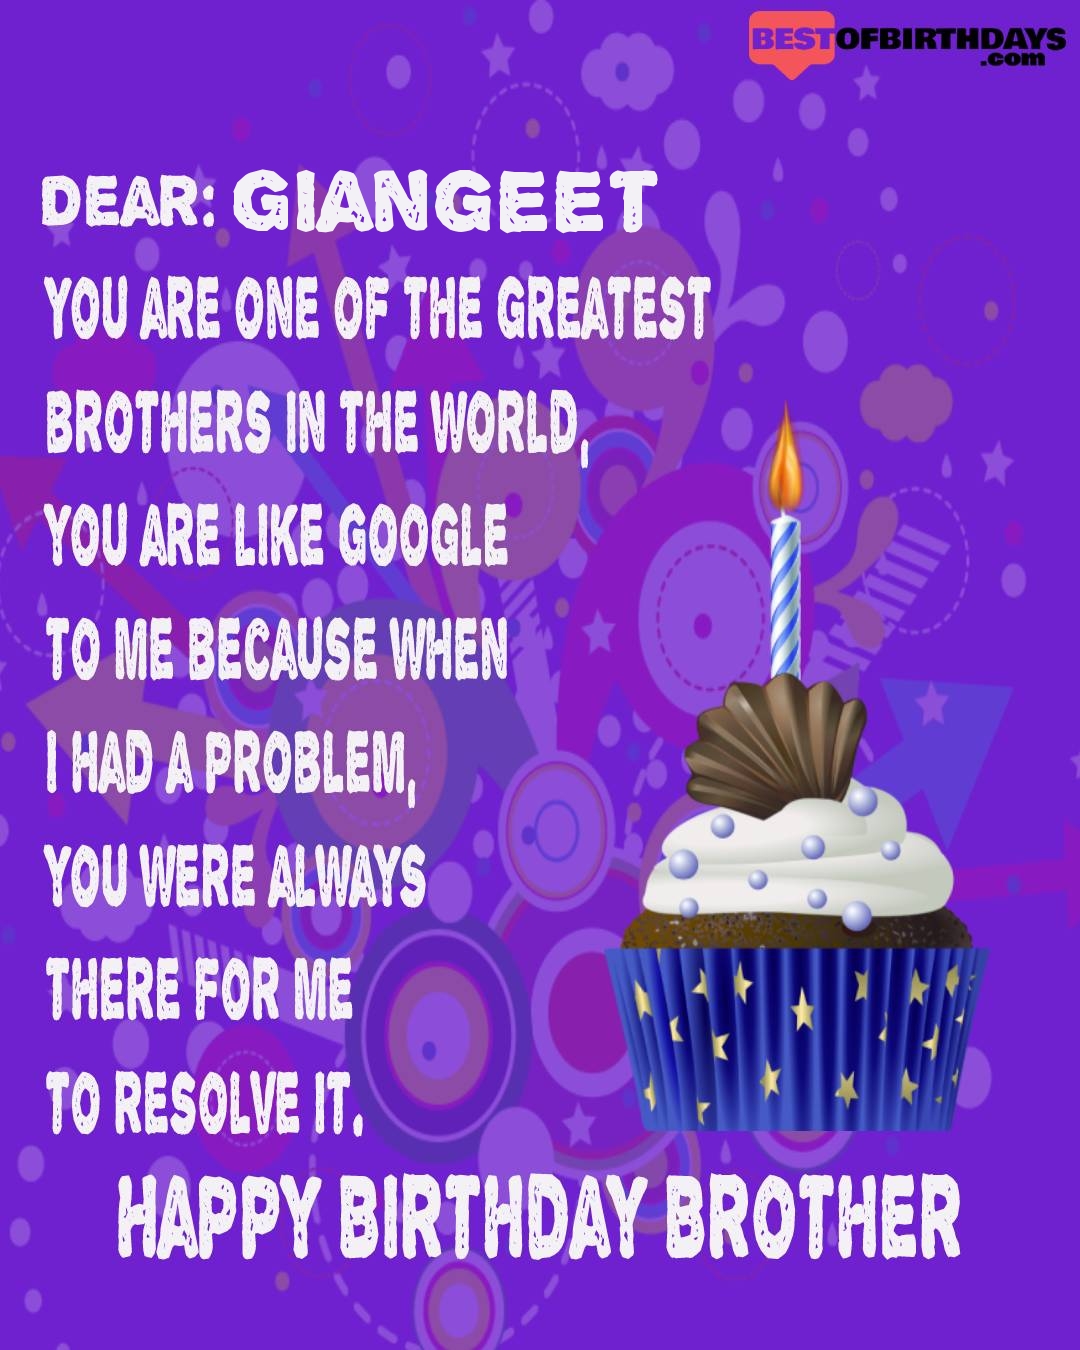 Happy birthday giangeet bhai brother bro